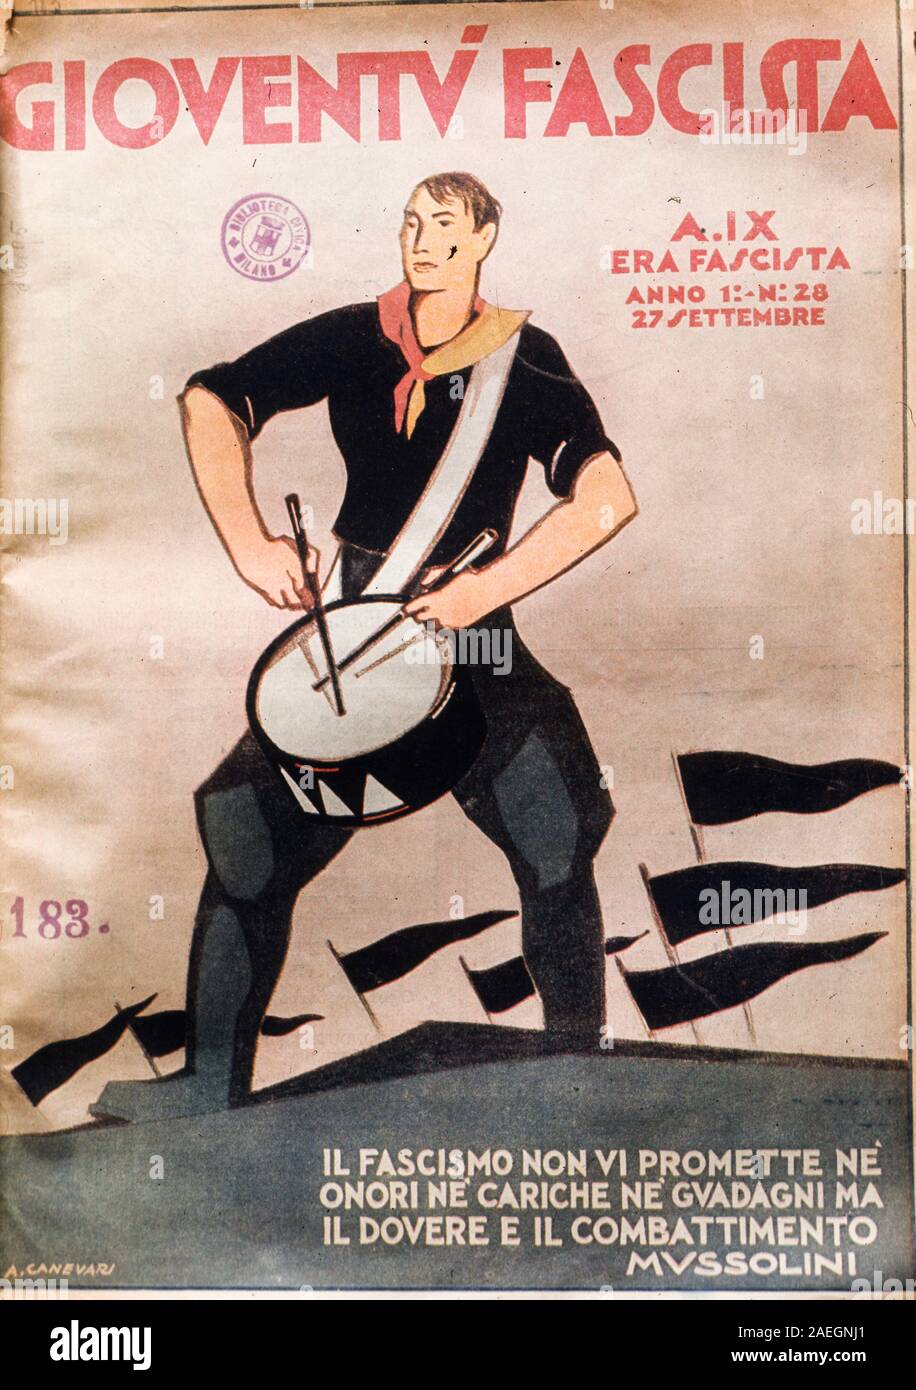 gioventu fascista, Italian magazine of the Fascist era, 1930s Stock Photo